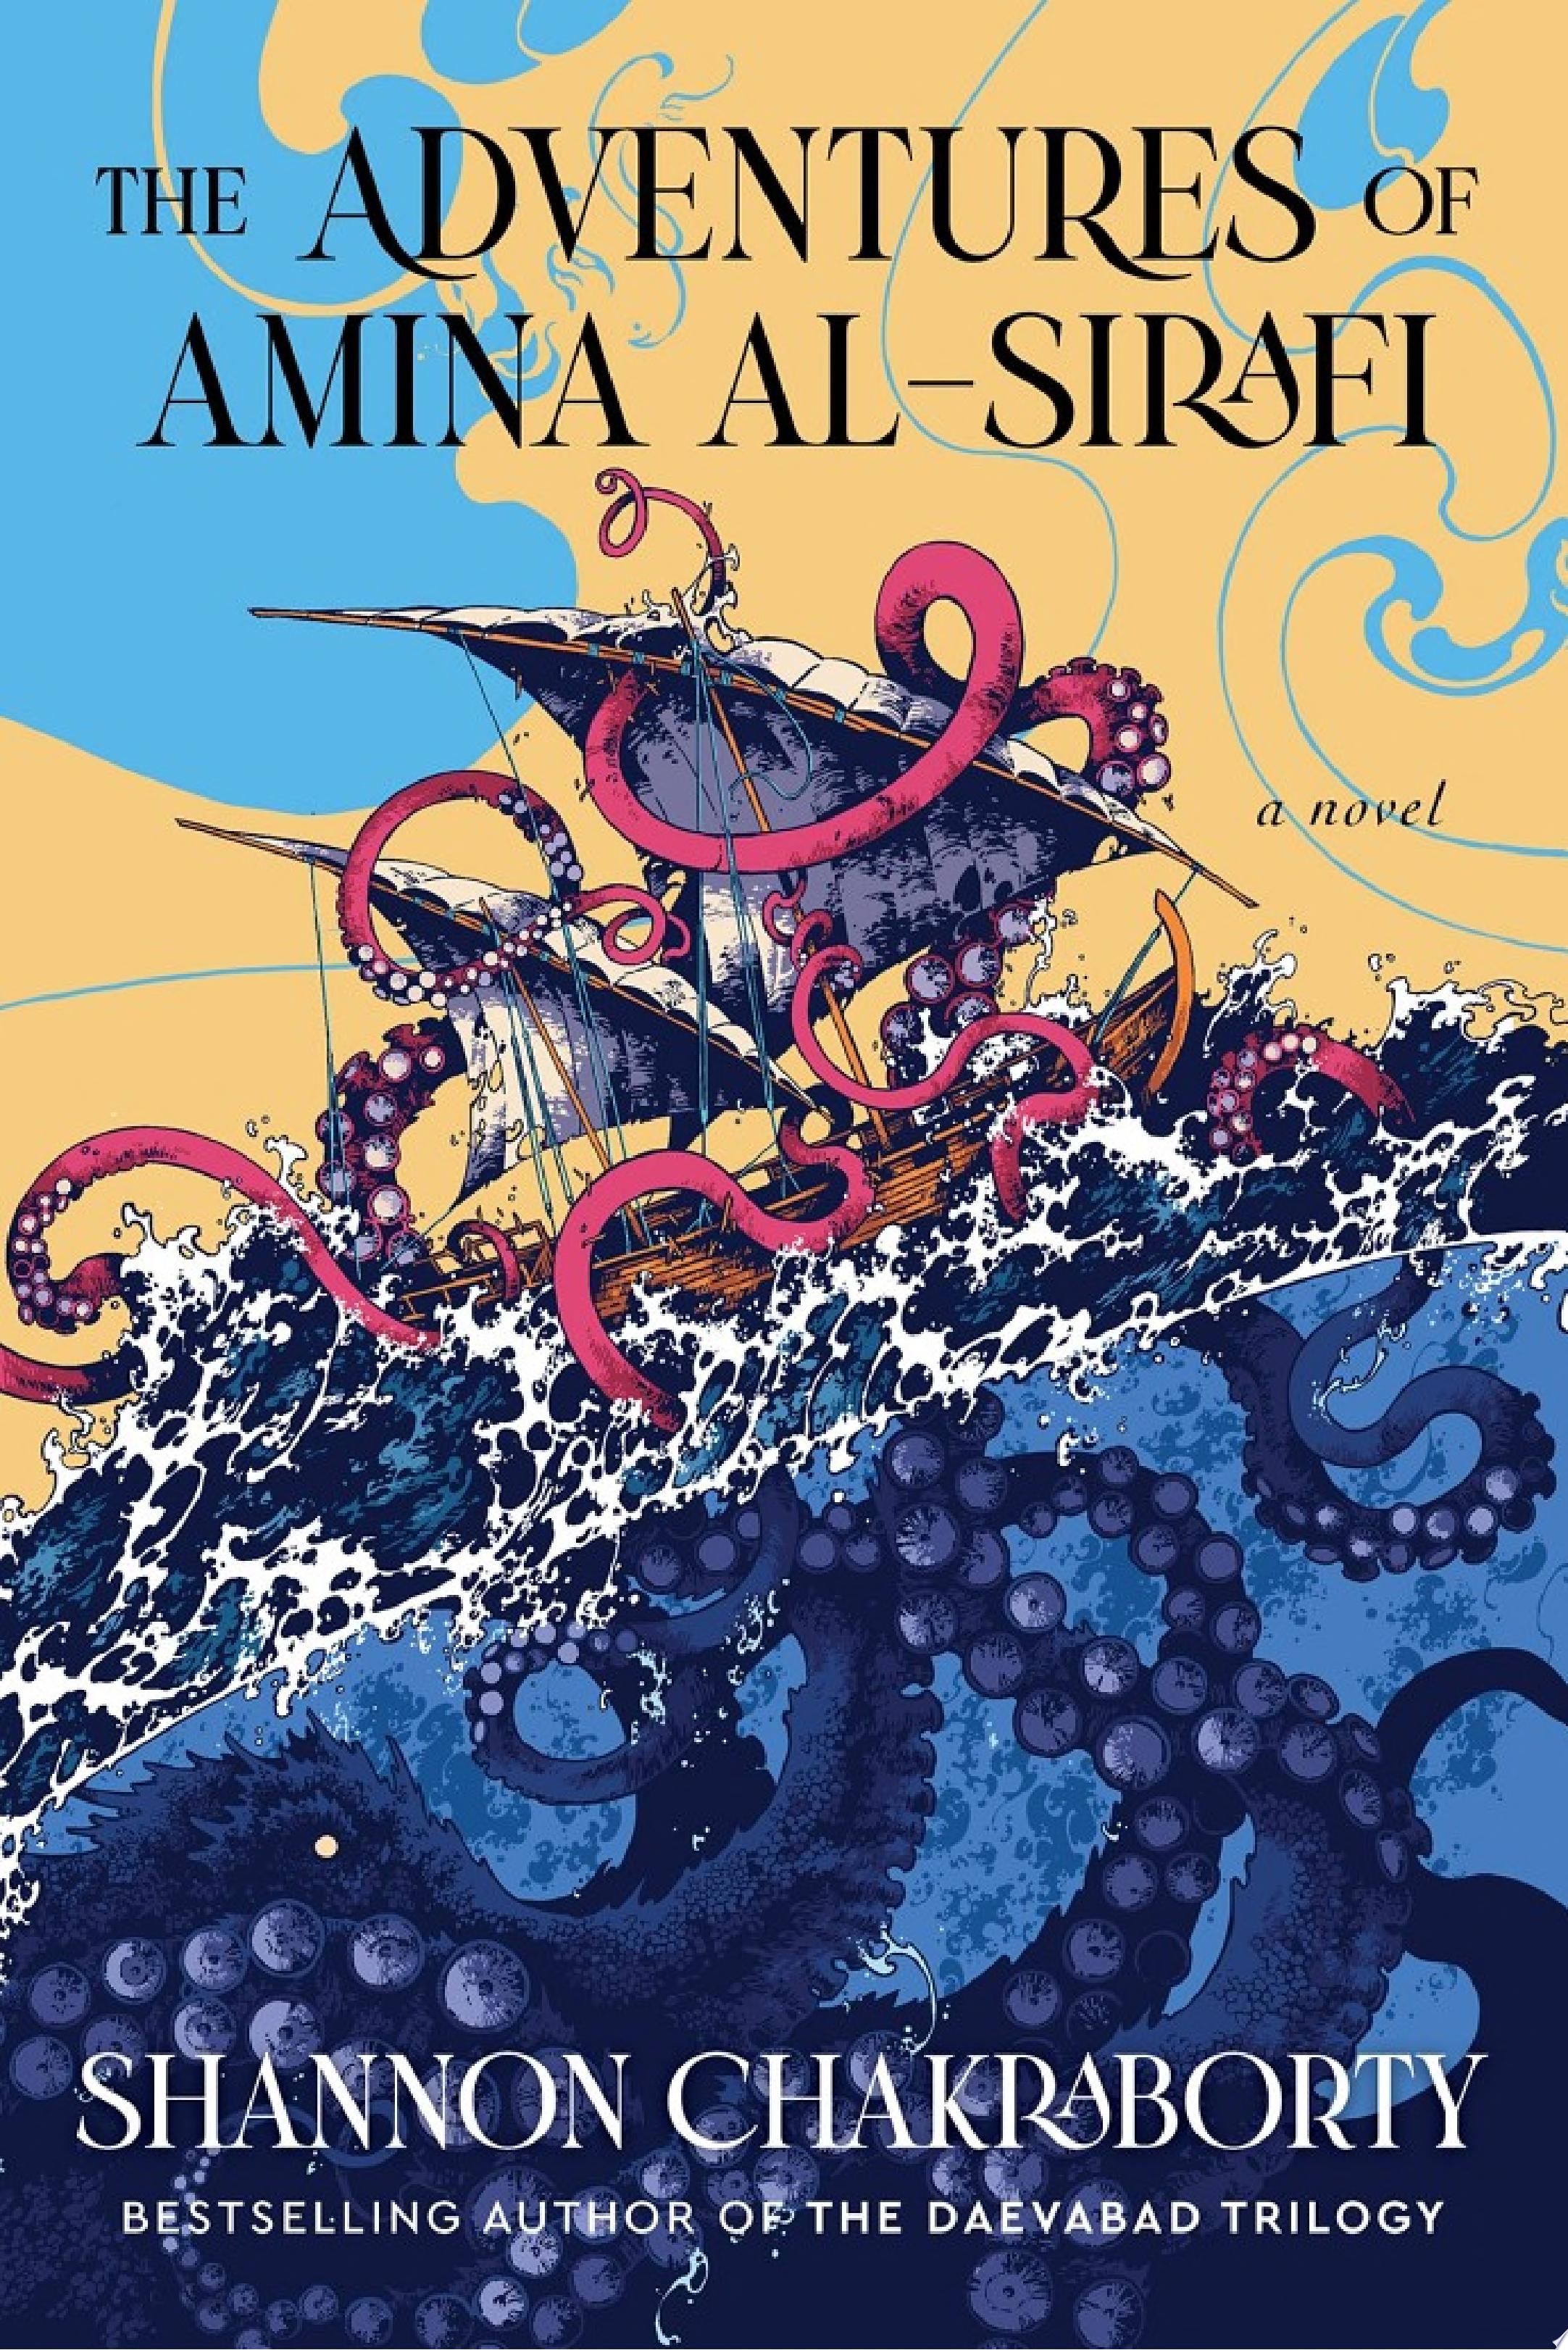 Image for "The Adventures of Amina al-Sirafi"